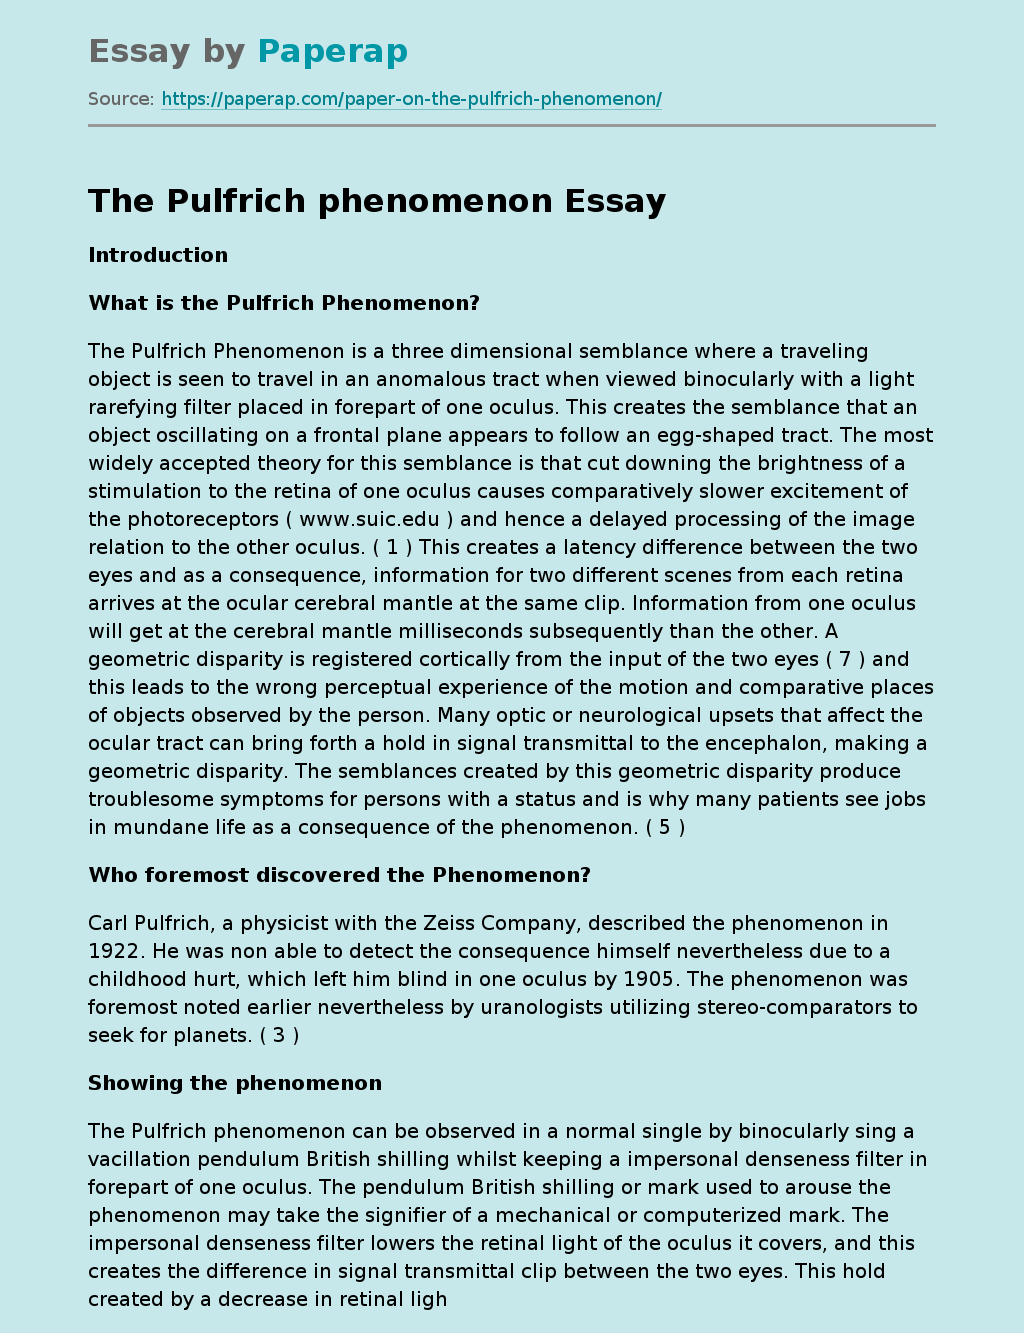 The Pulfrich phenomenon